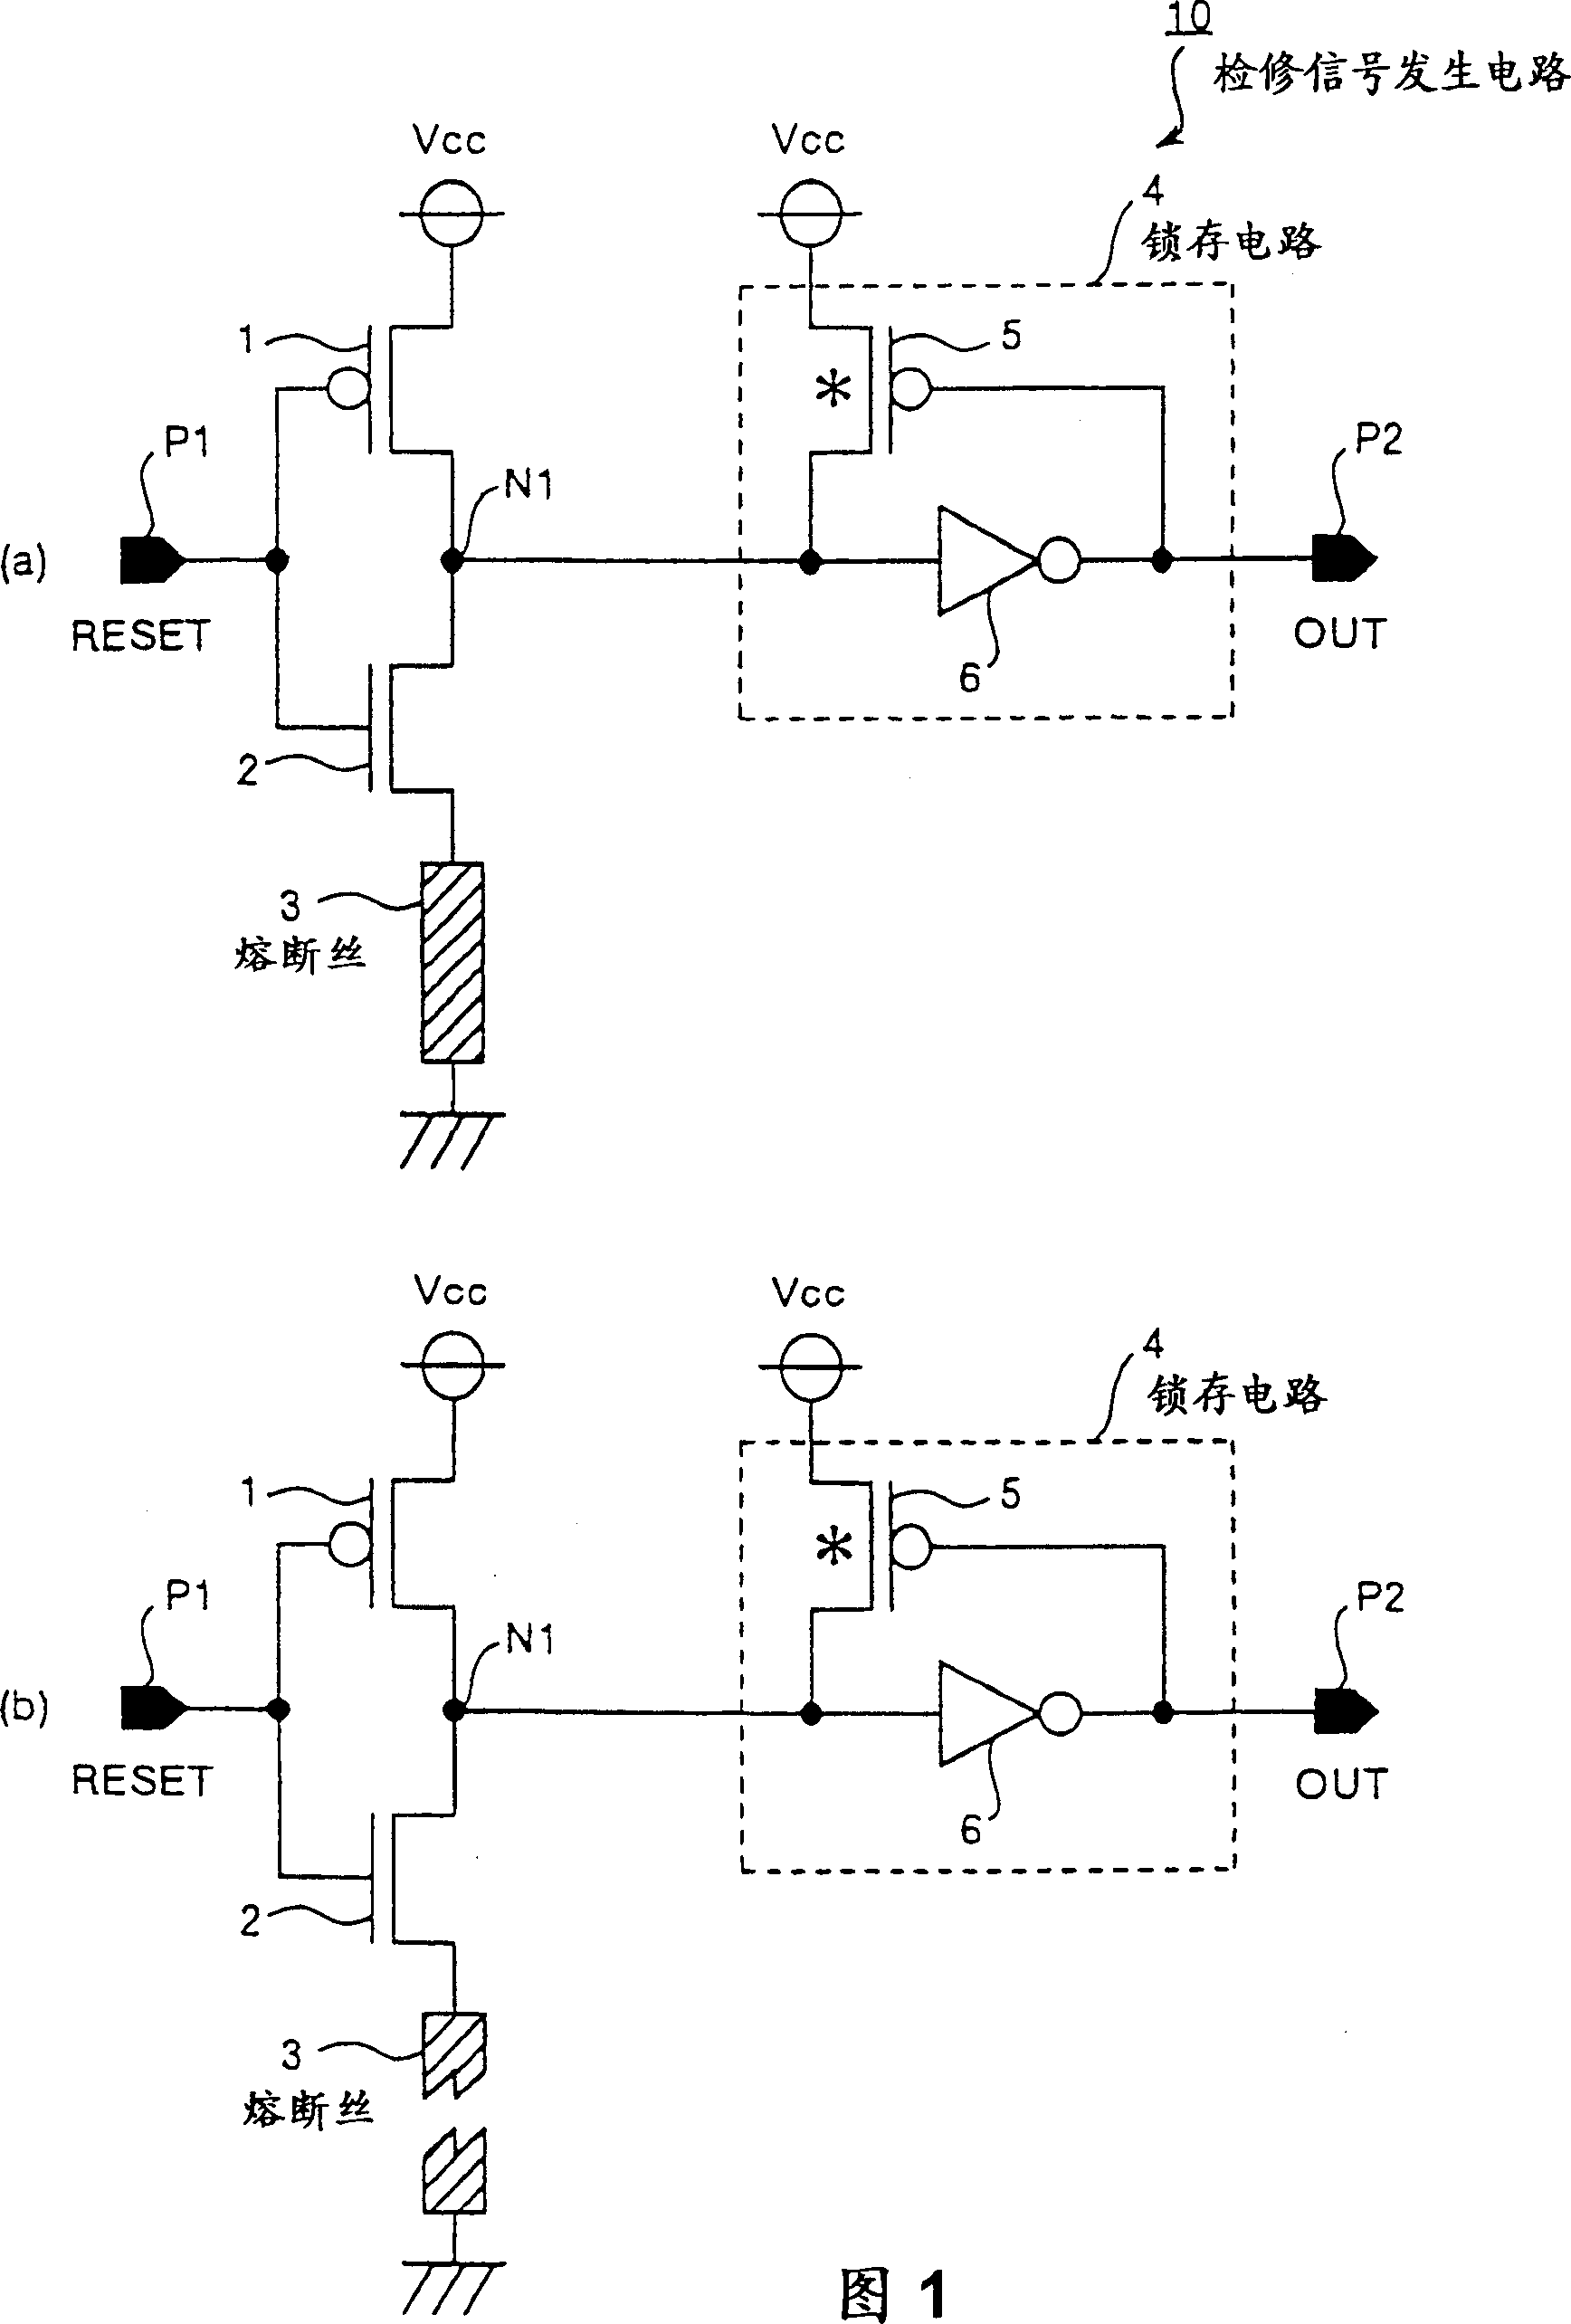 Service signal generating circuit